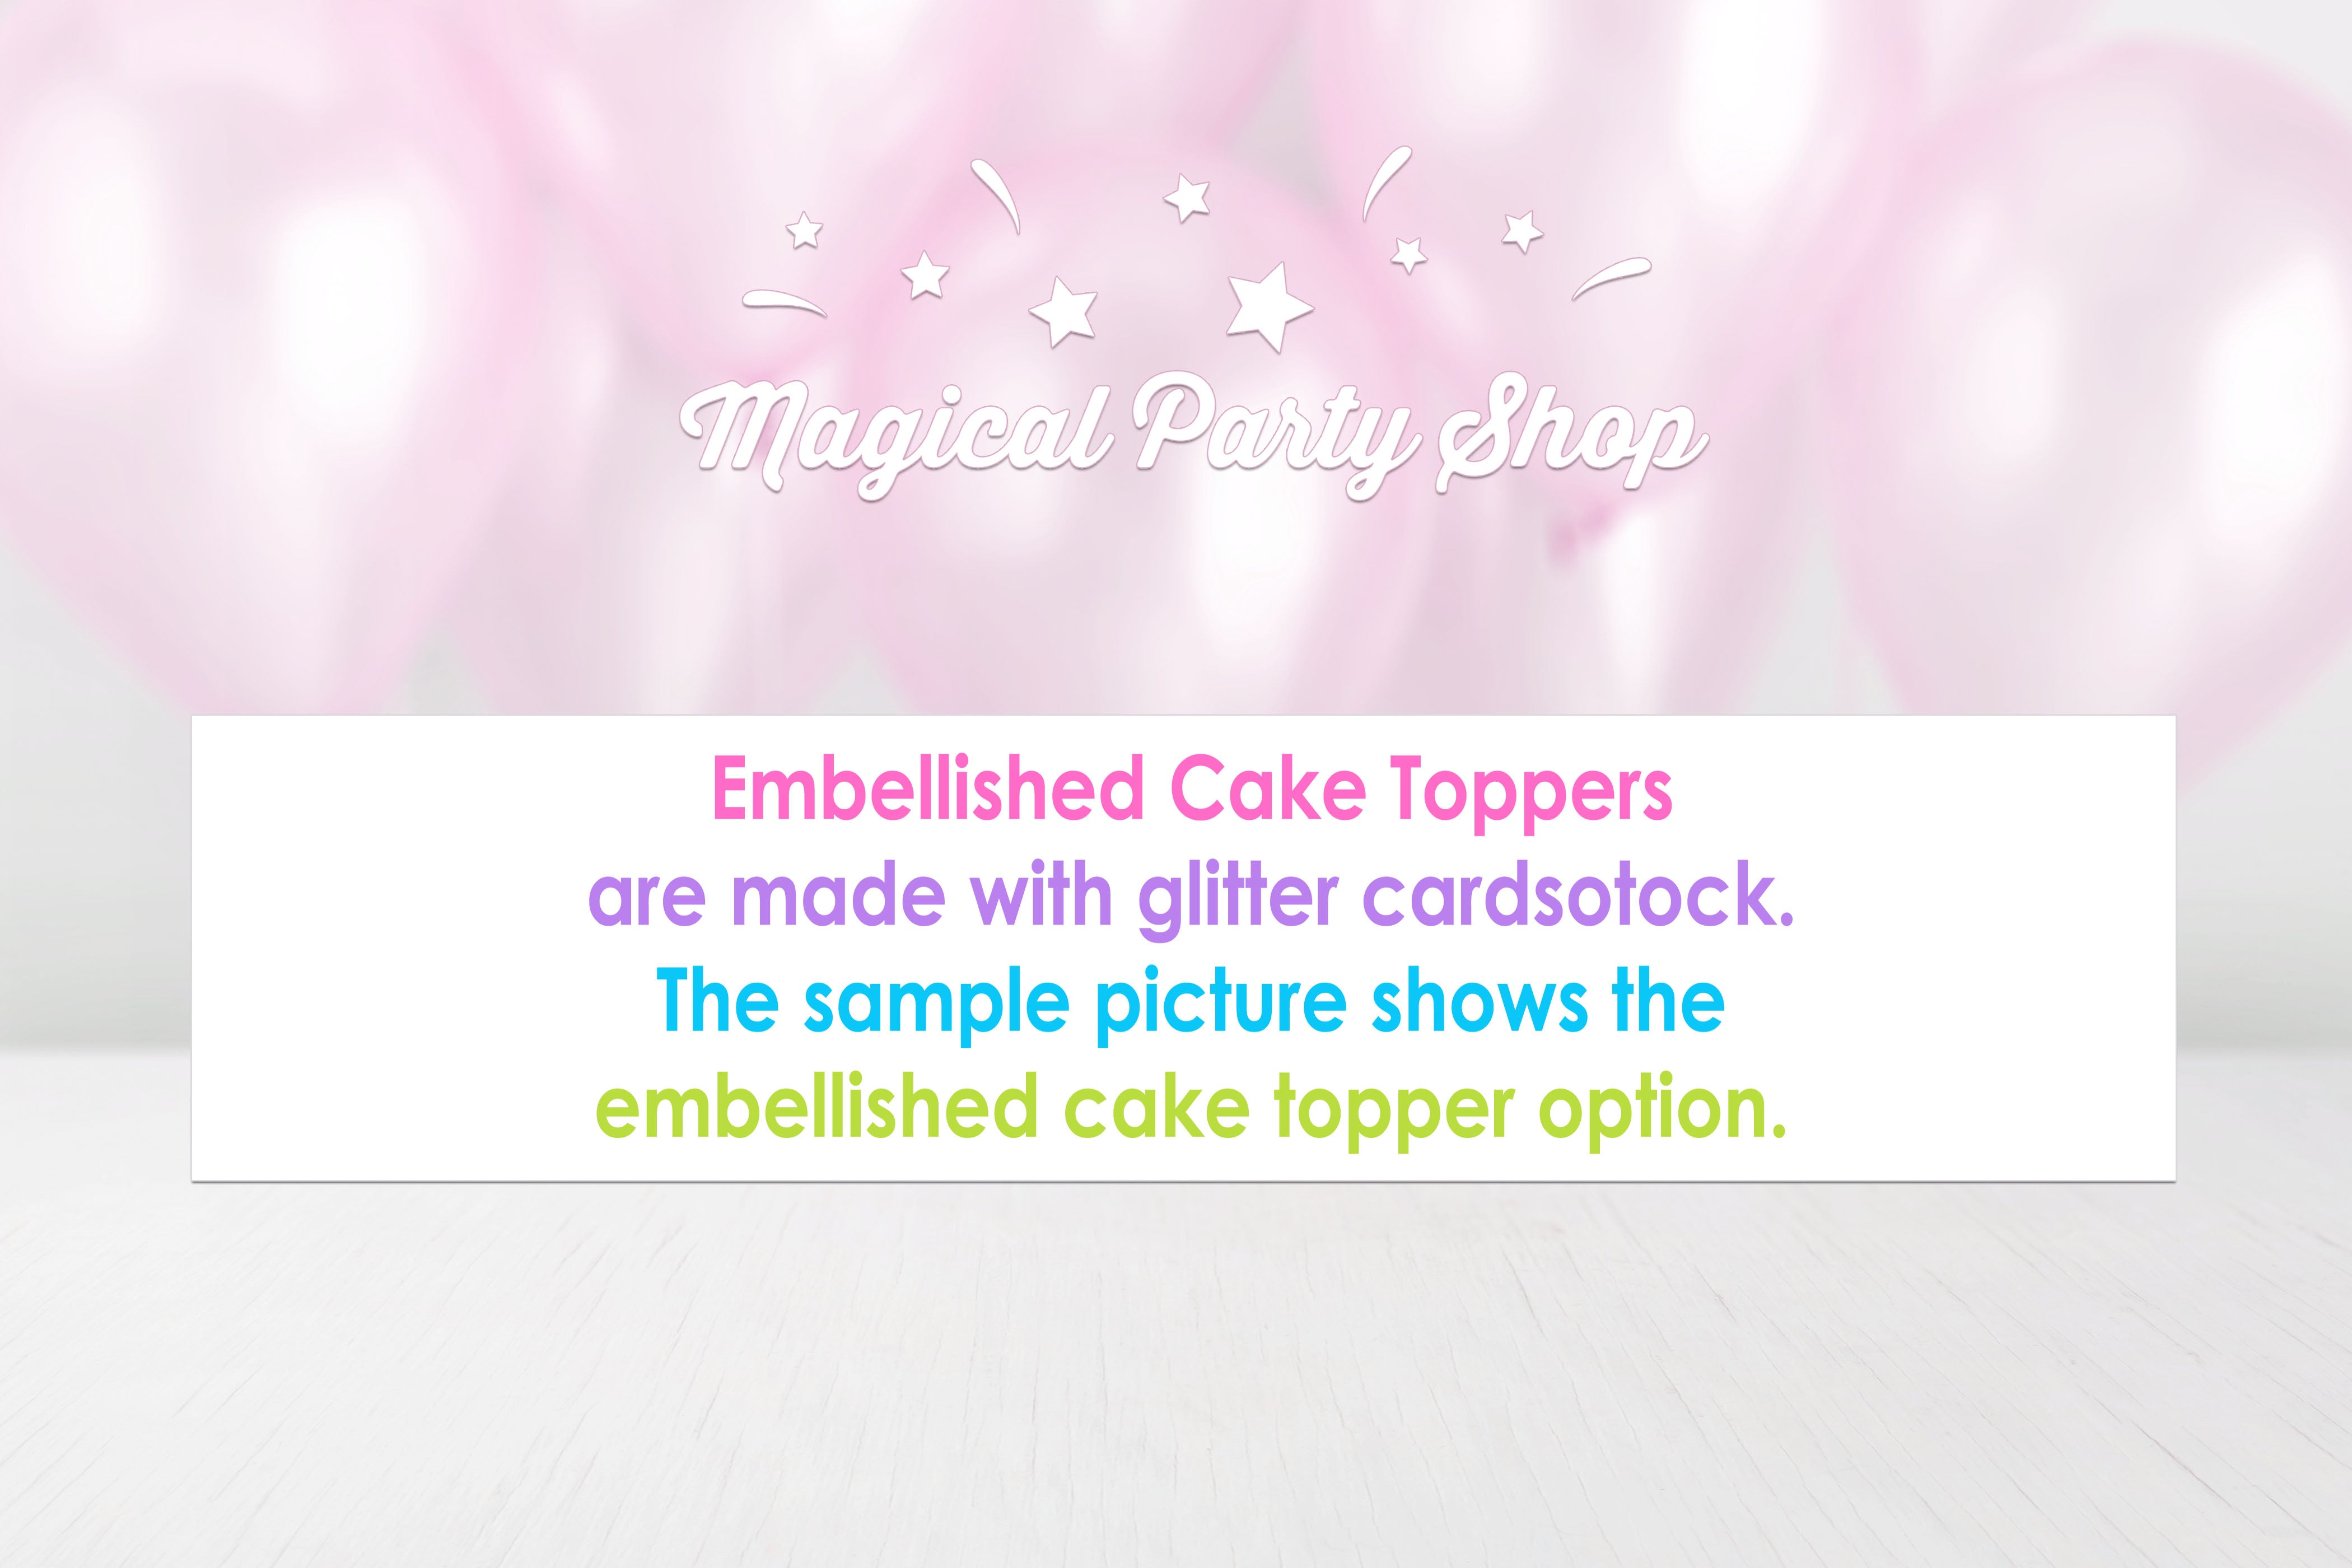 Vintage Baby Girl Seashell Cake Topper | Pink and Gold | Vintage Baby Girl African American | Baby Shower